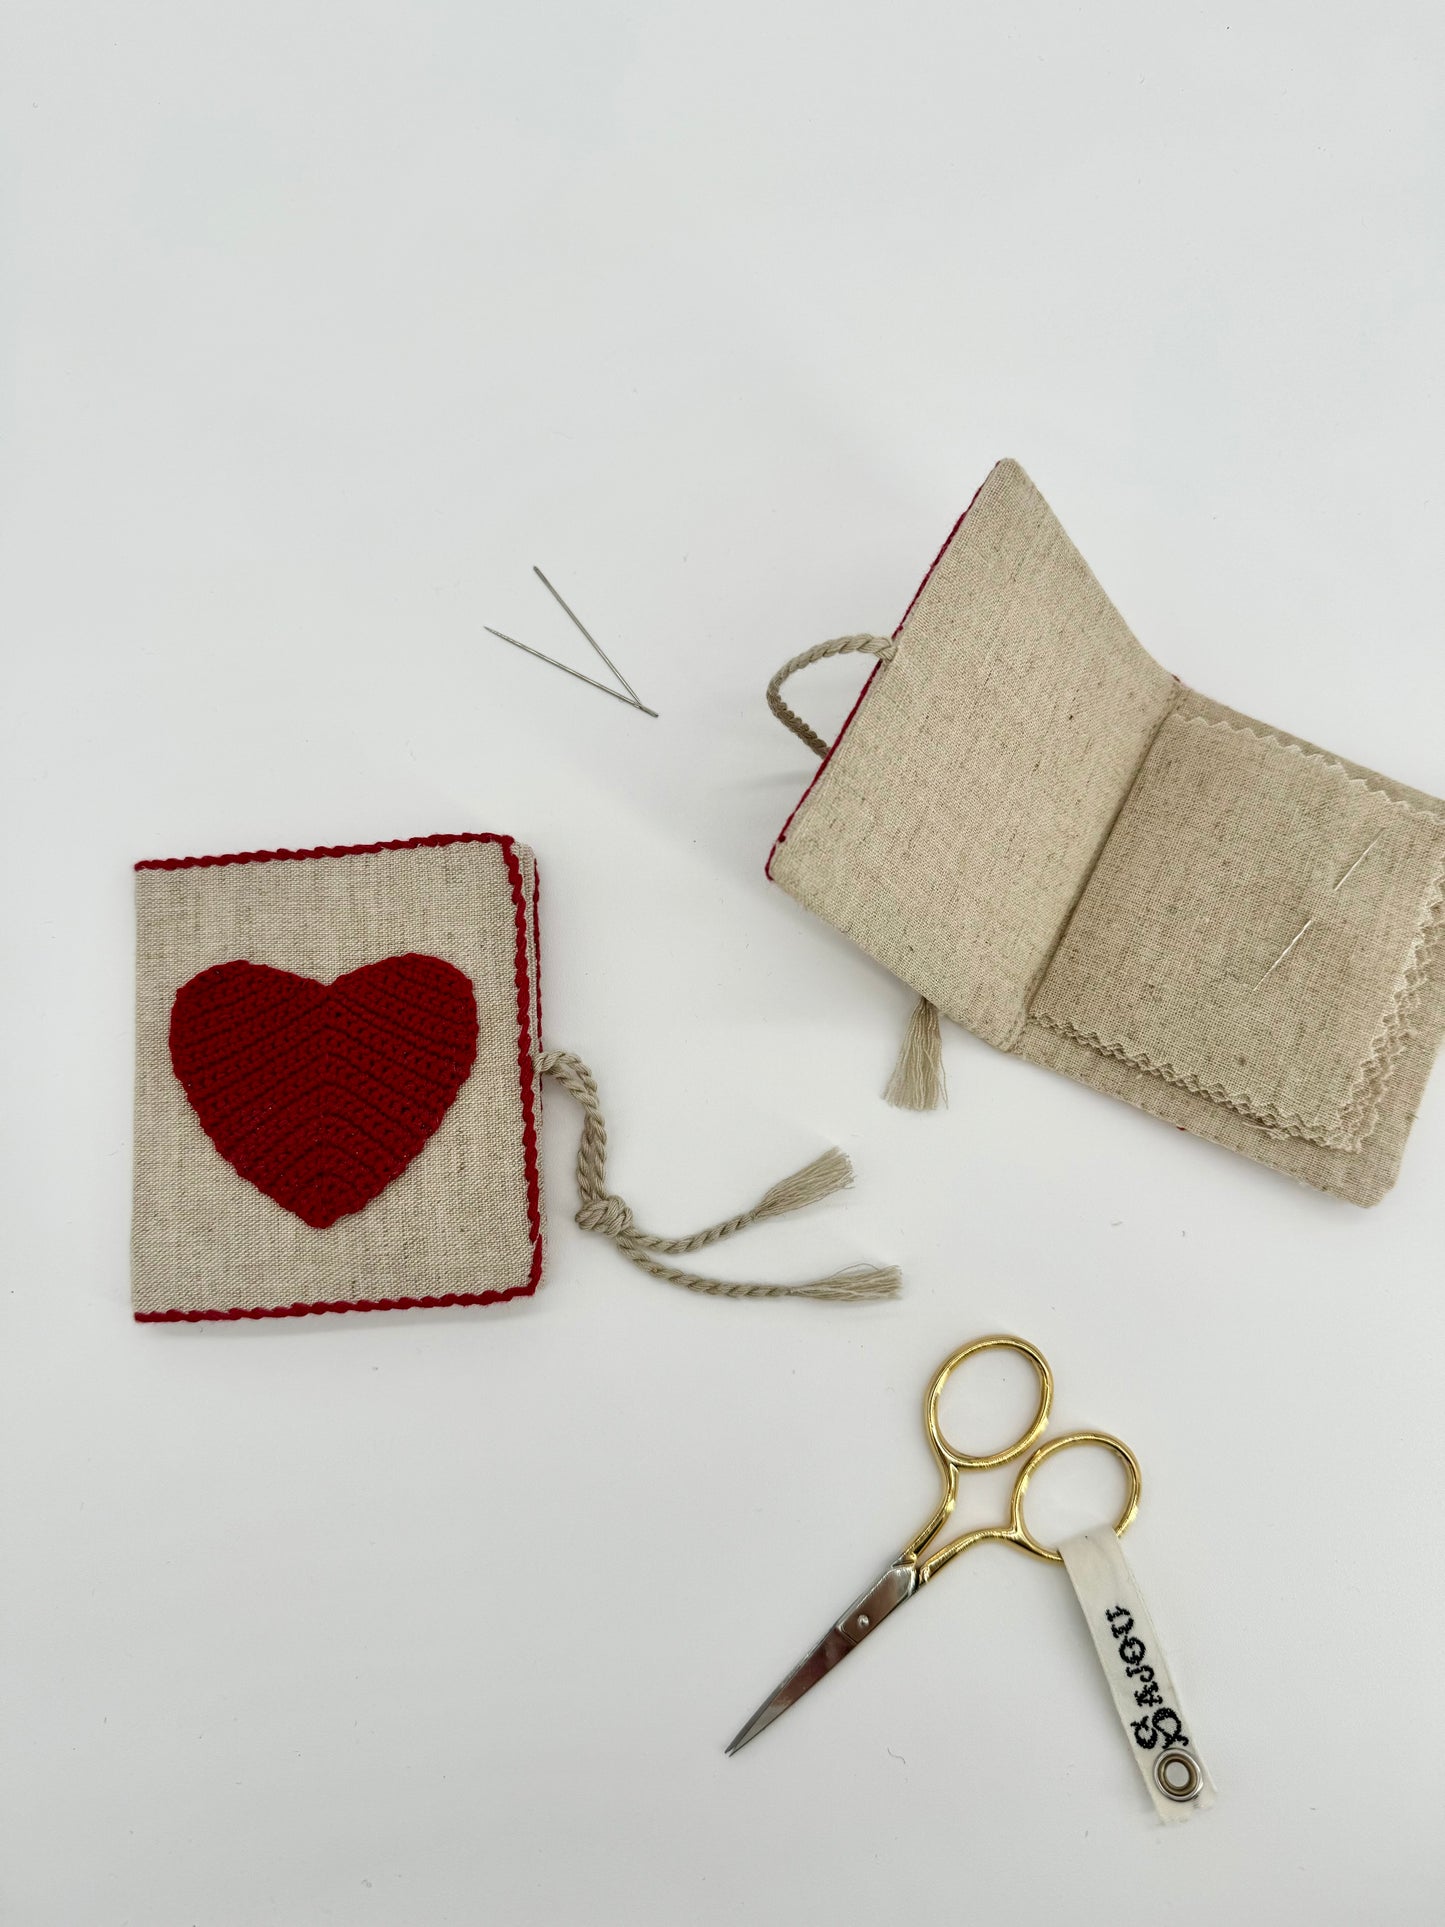 Crocheted Heart Needle Book